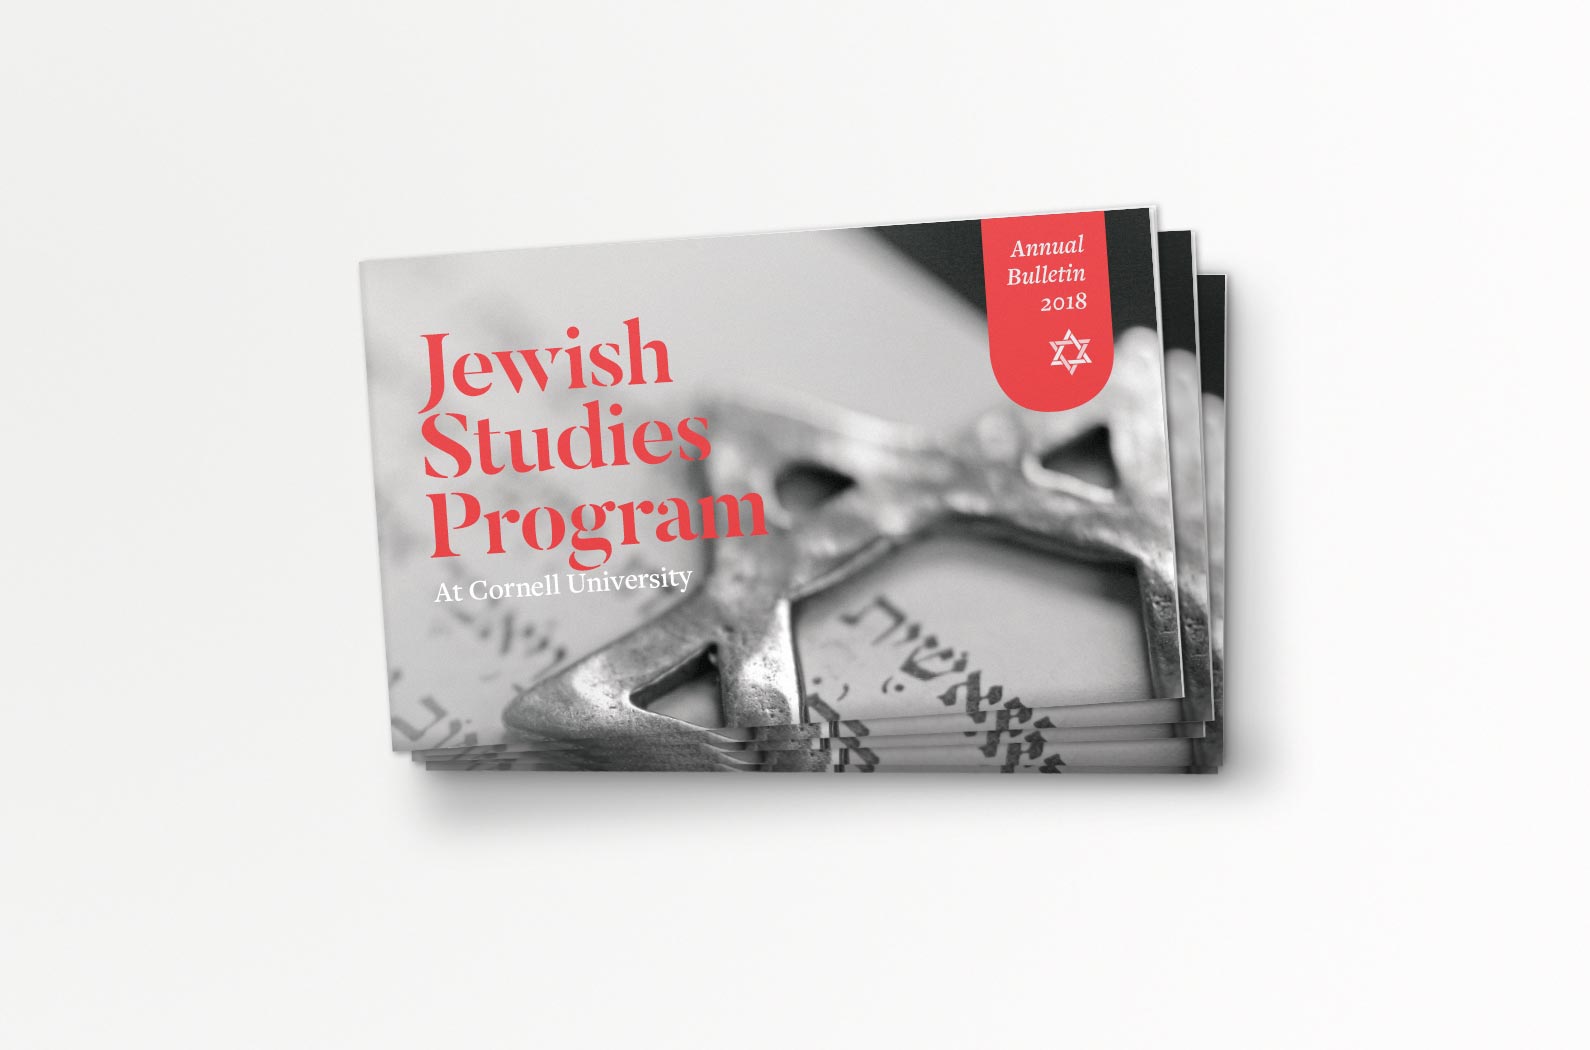 Jewish Studies Program Newsletter Front